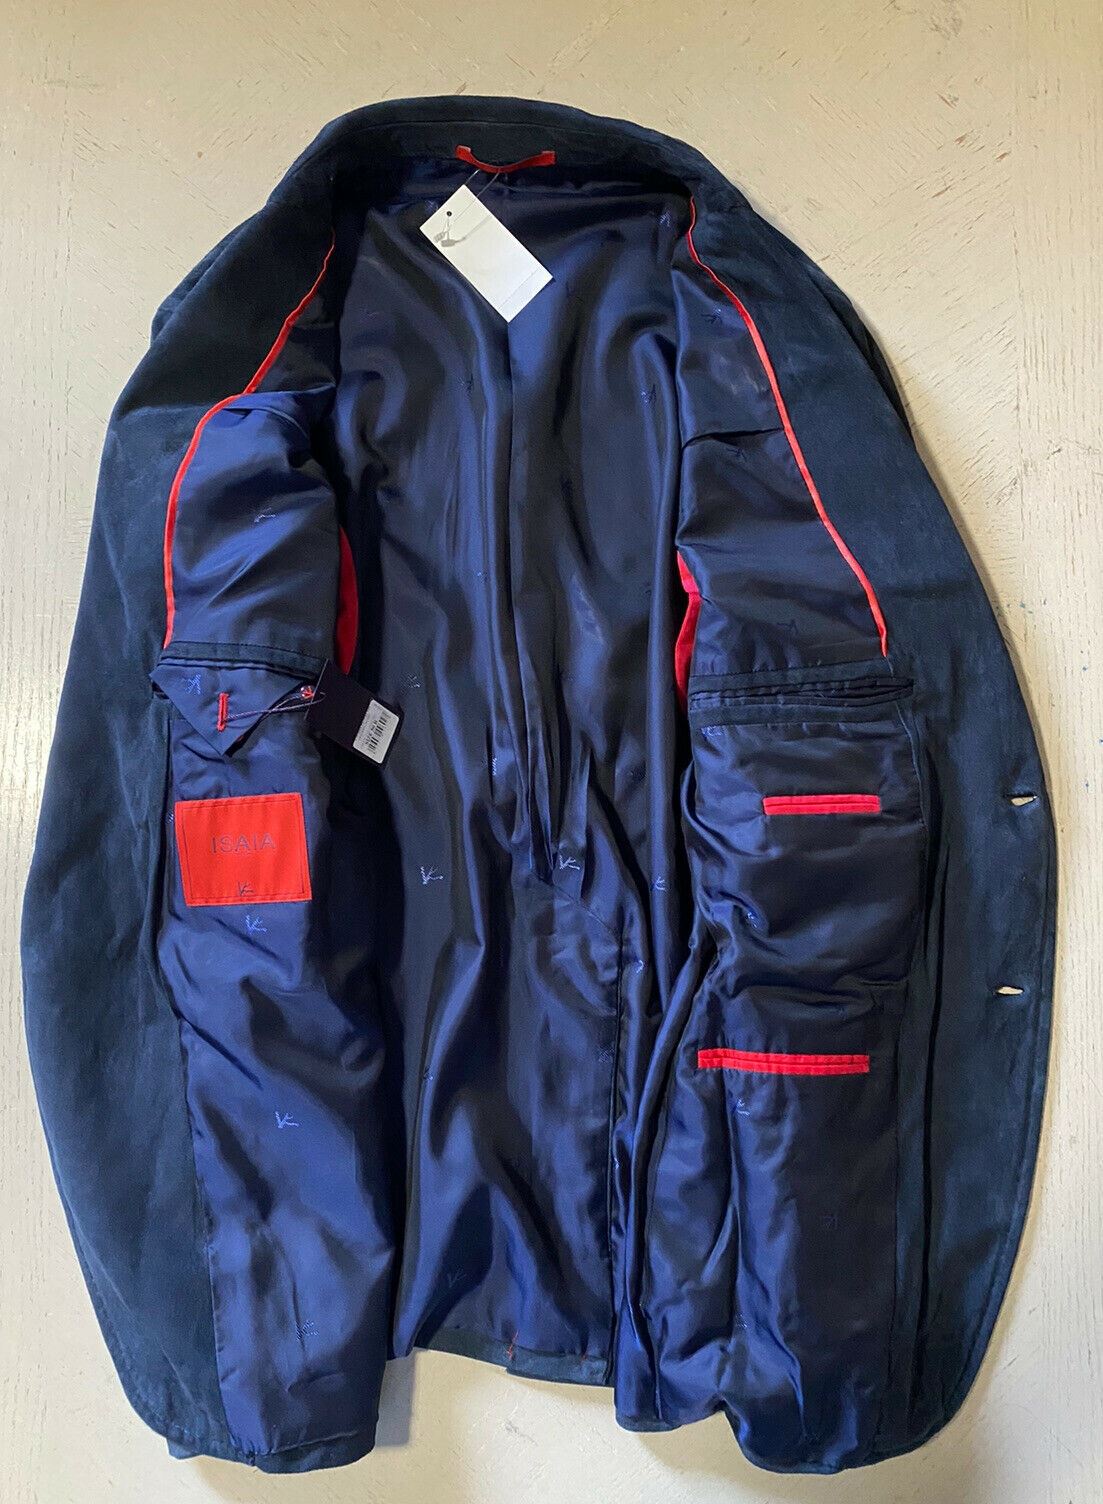 NWT $4995 Isaia Men Silk Suede Blazer Jacket Sport Coat Navy 44R US/54R Eu